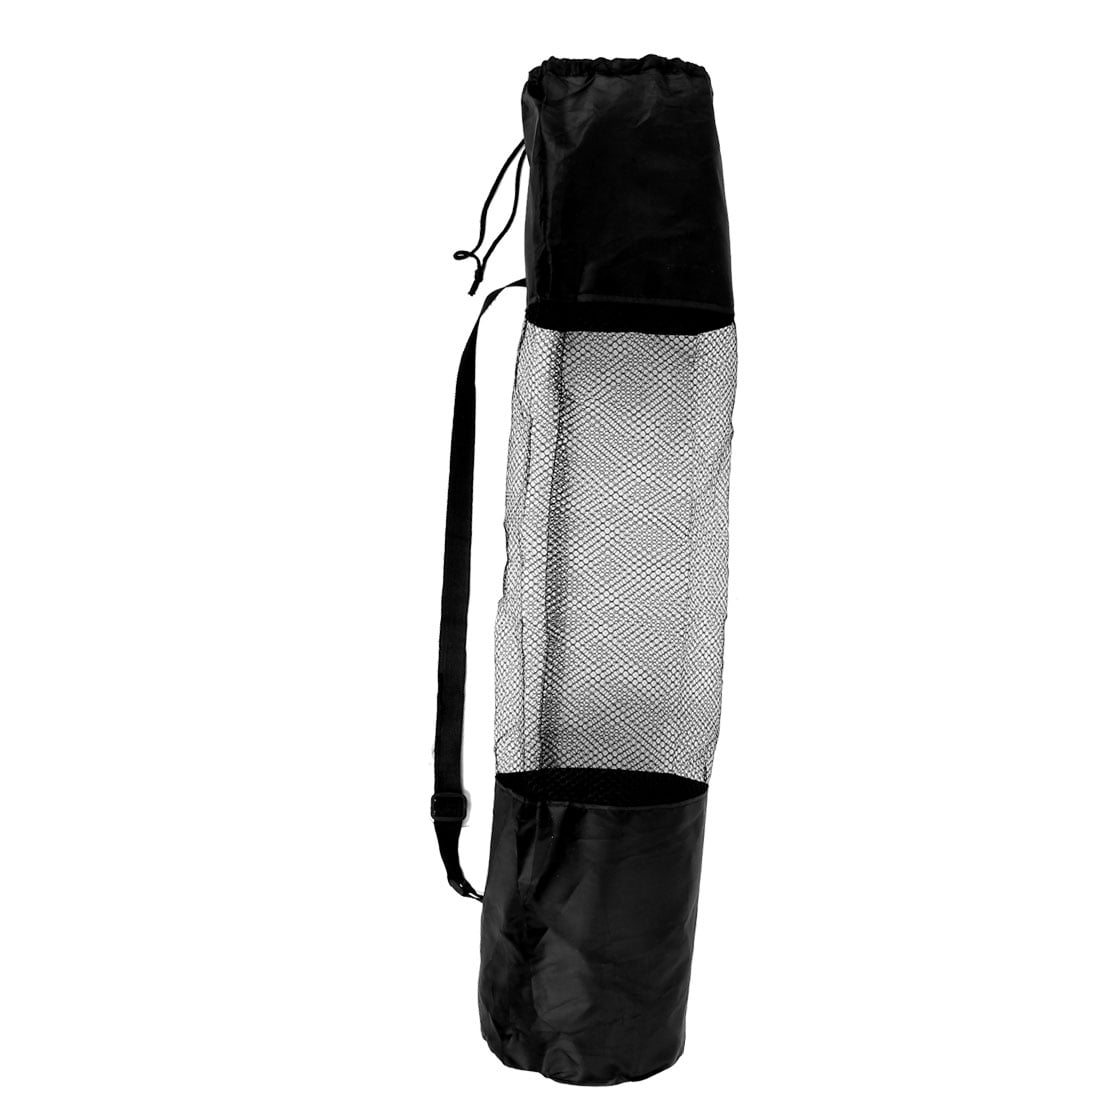 Portable Yoga Pilates Mat Mesh Case Bag Nylon Exercise Workout Carrier 67cm New 